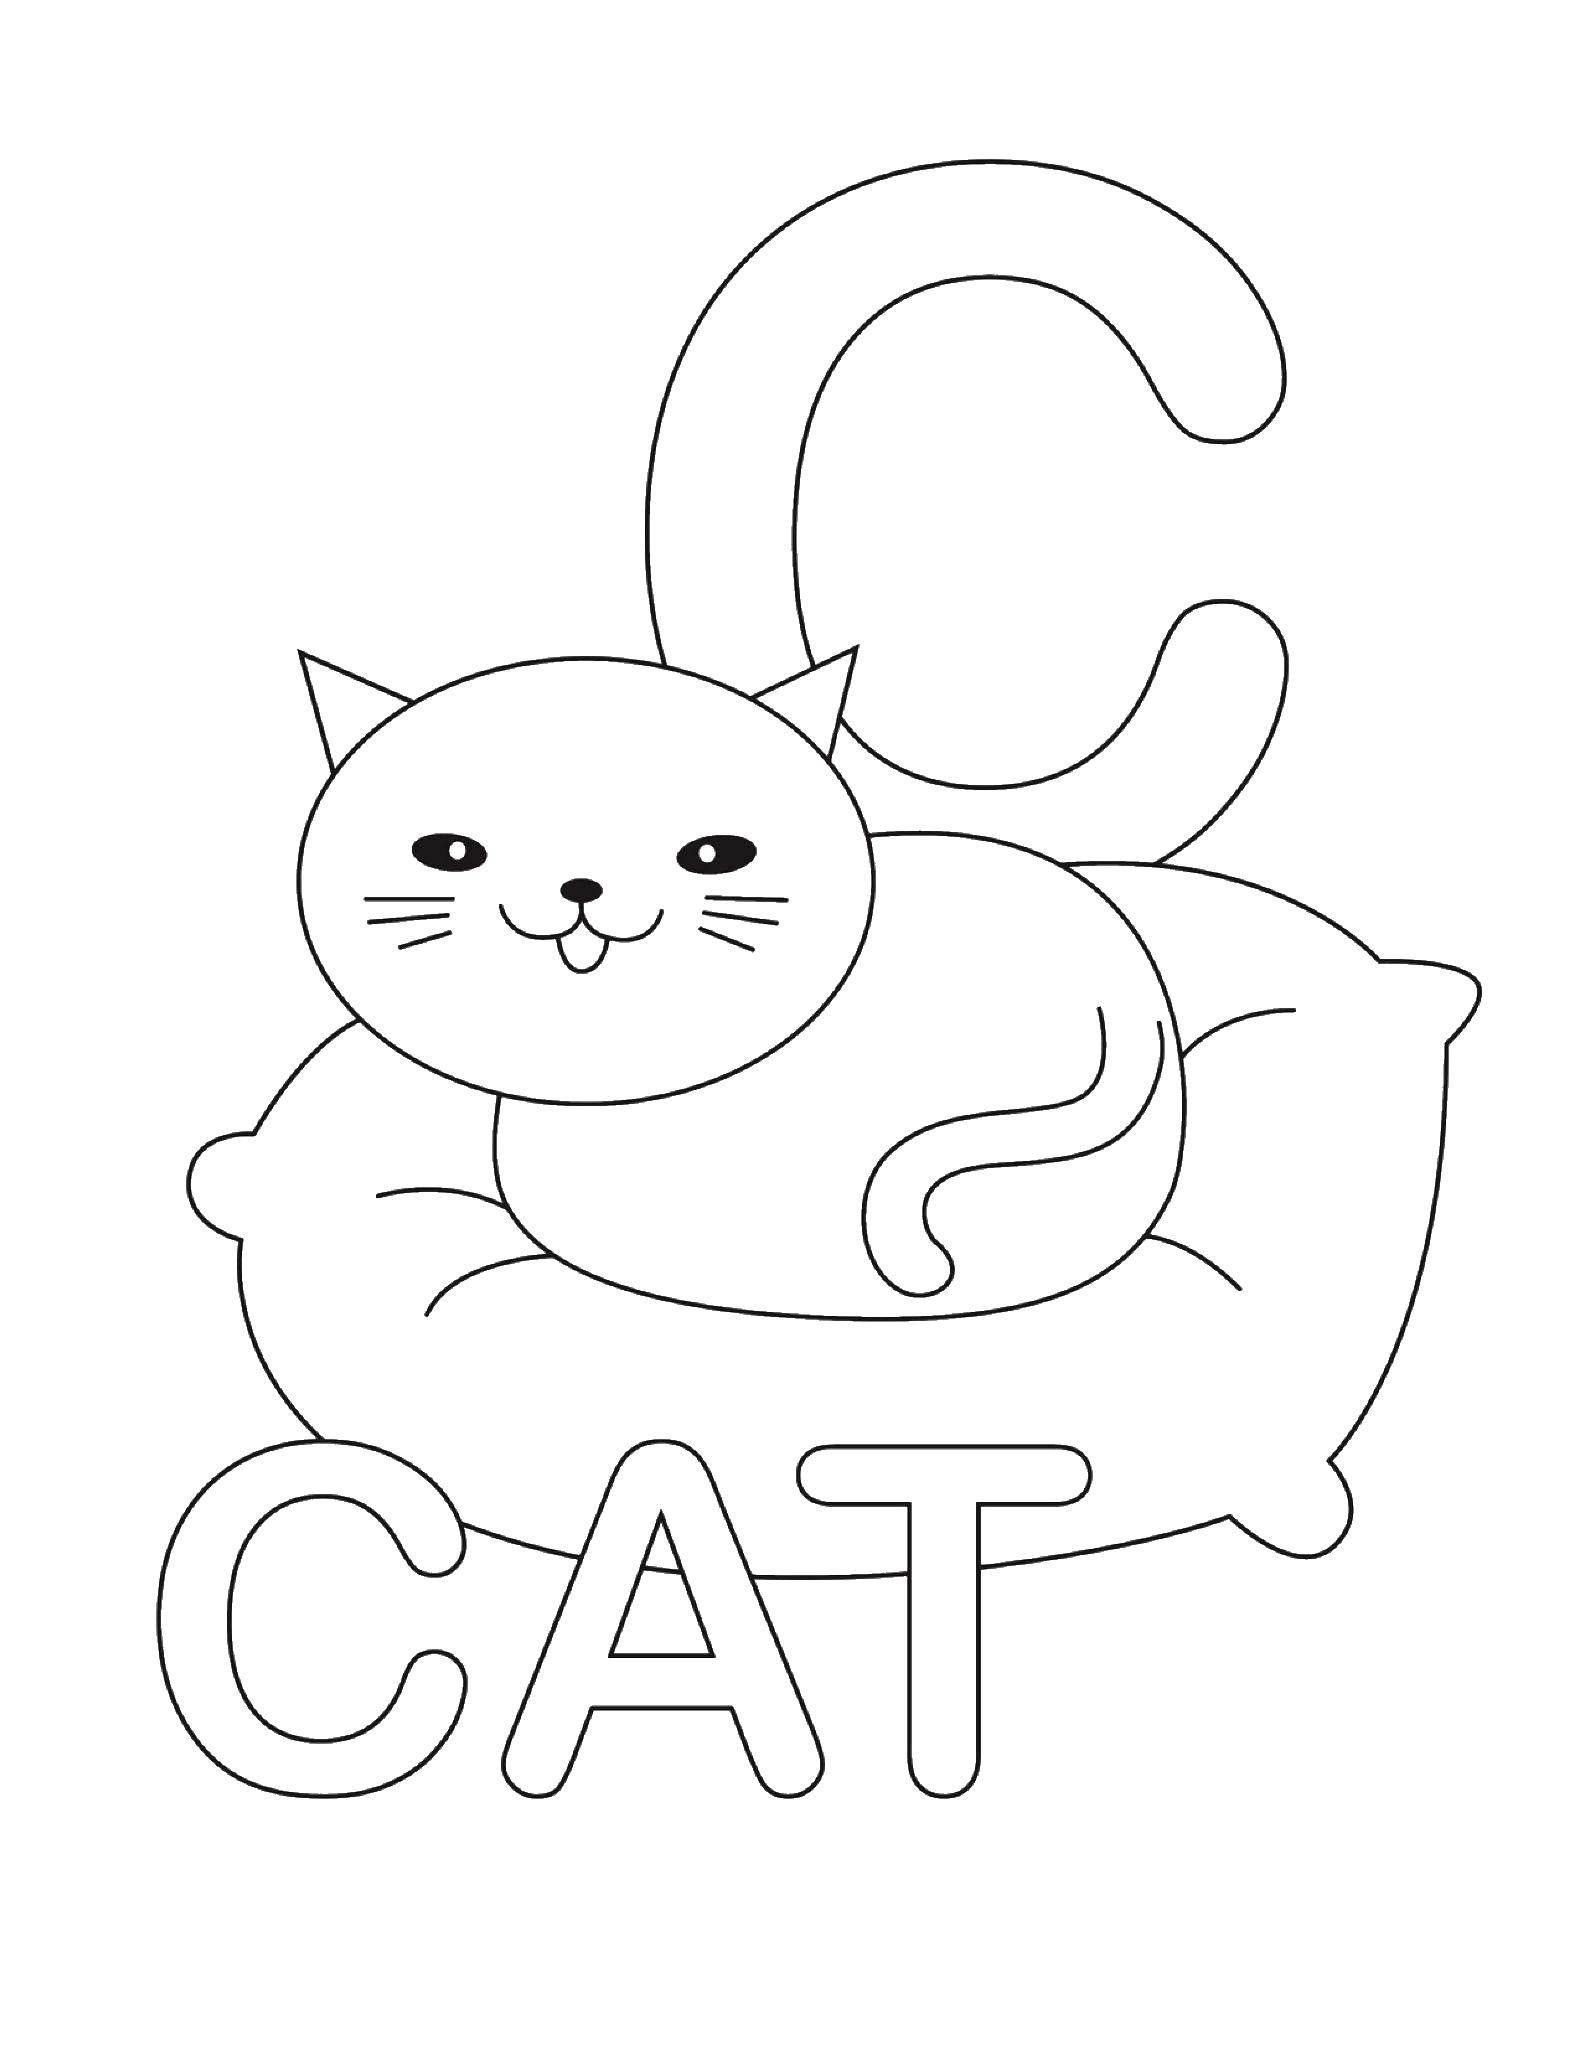 Название: Раскраска К кошка. Категория: английские слова. Теги: Английский.